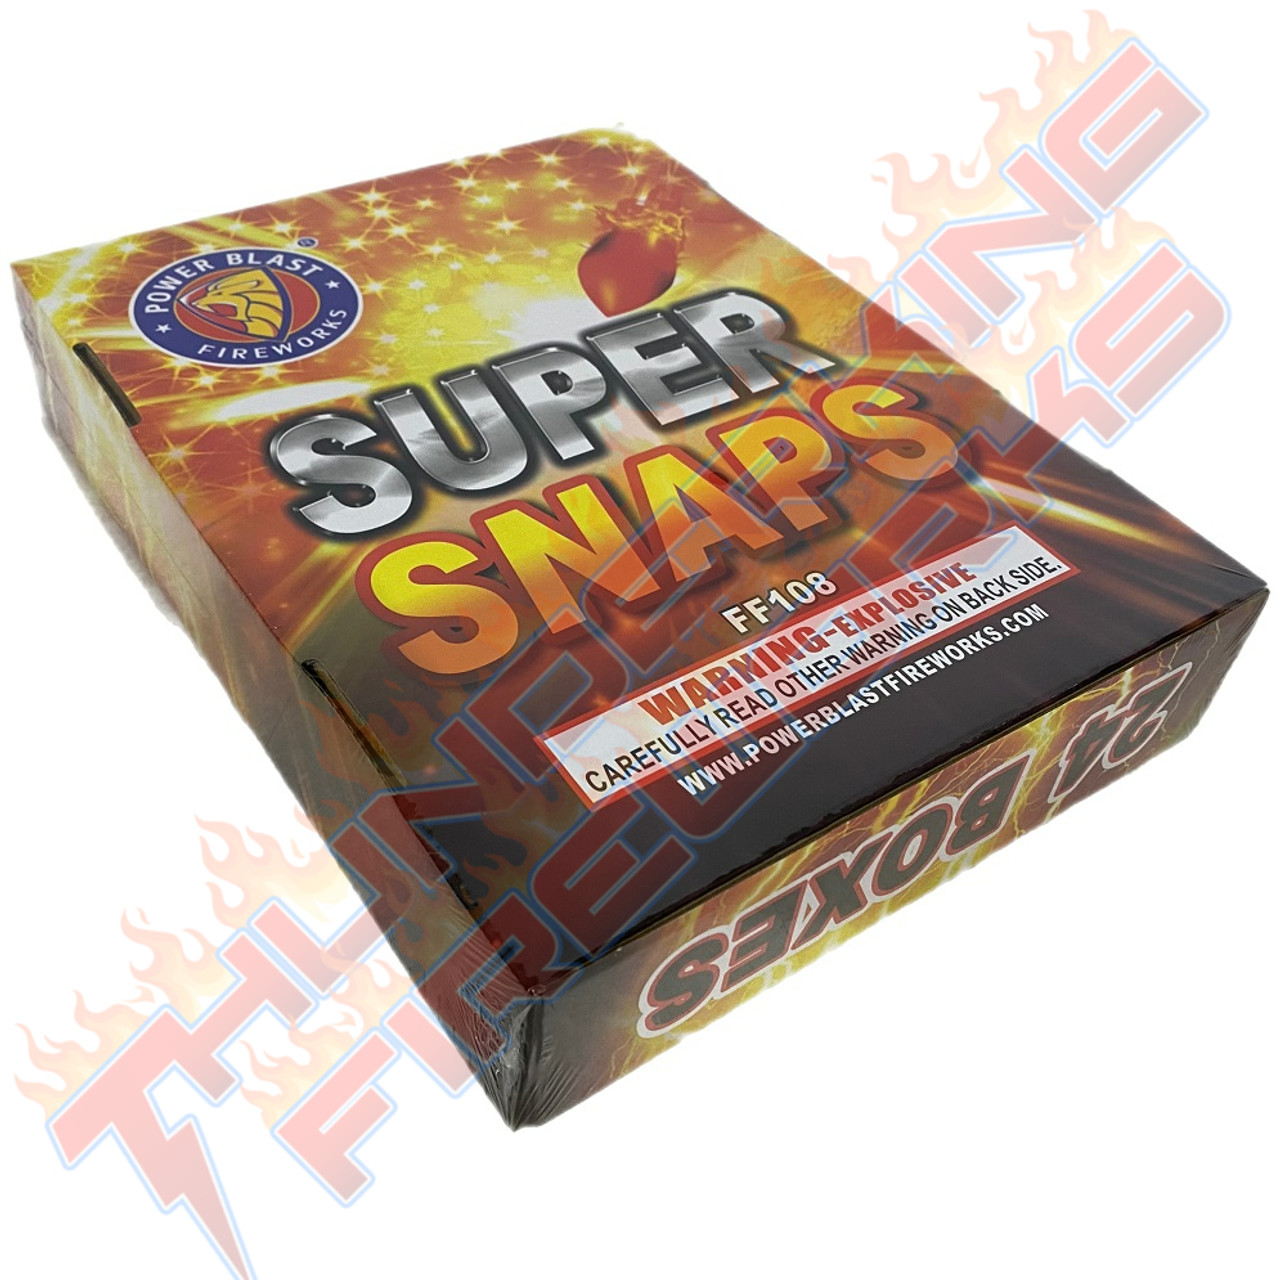 super-snaps-20ct-box.html